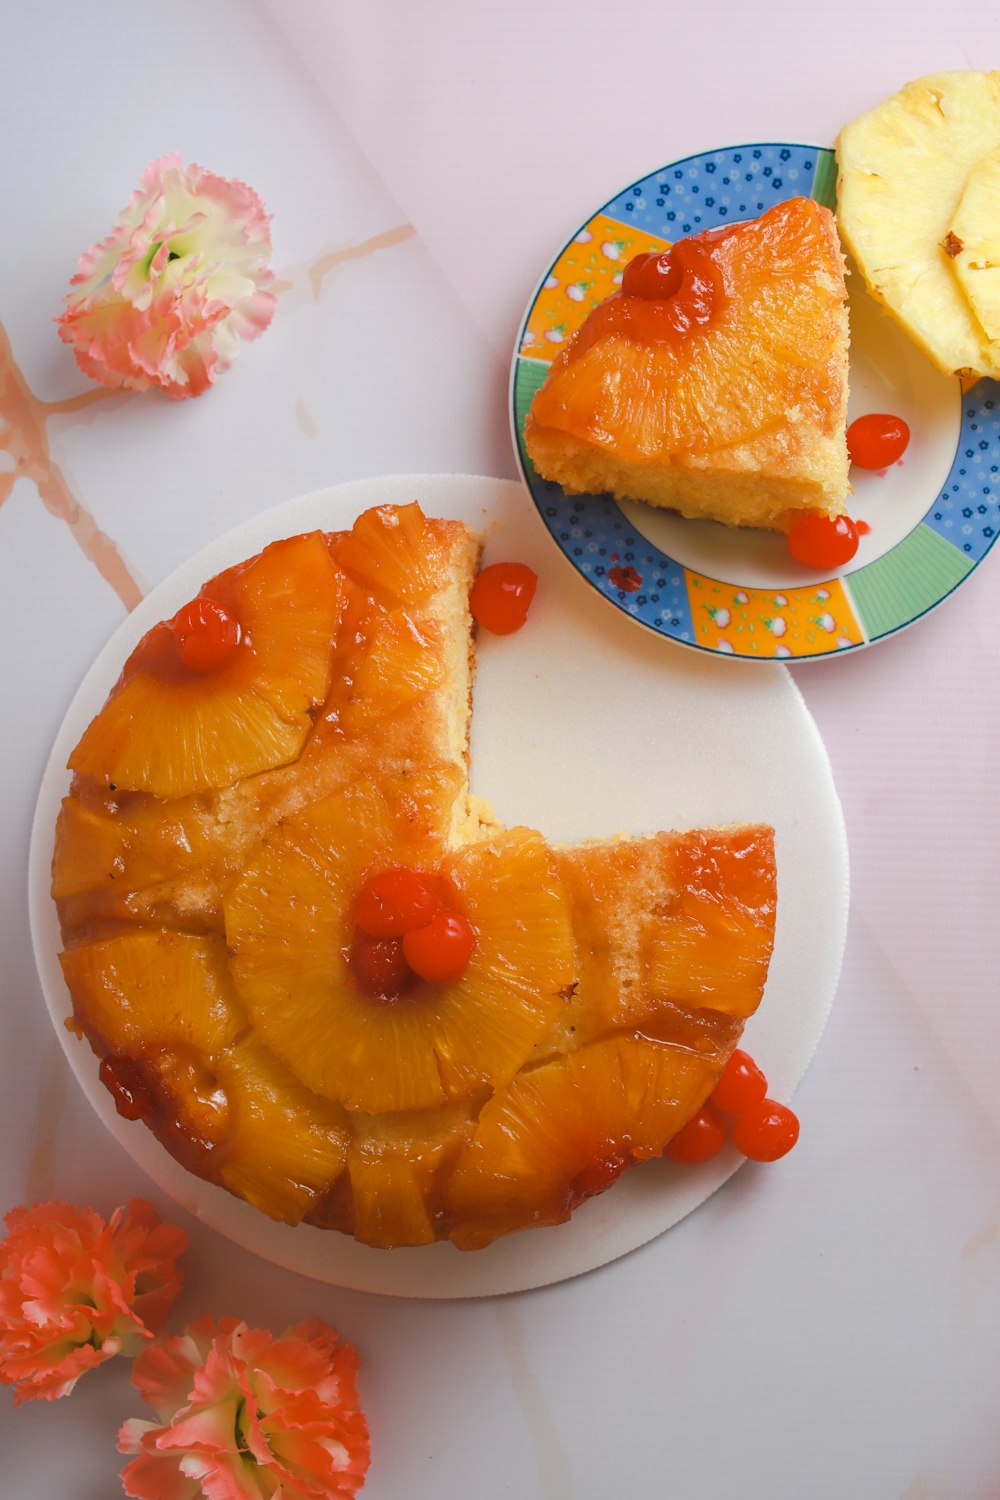 a pineapple upside down cake on a plate